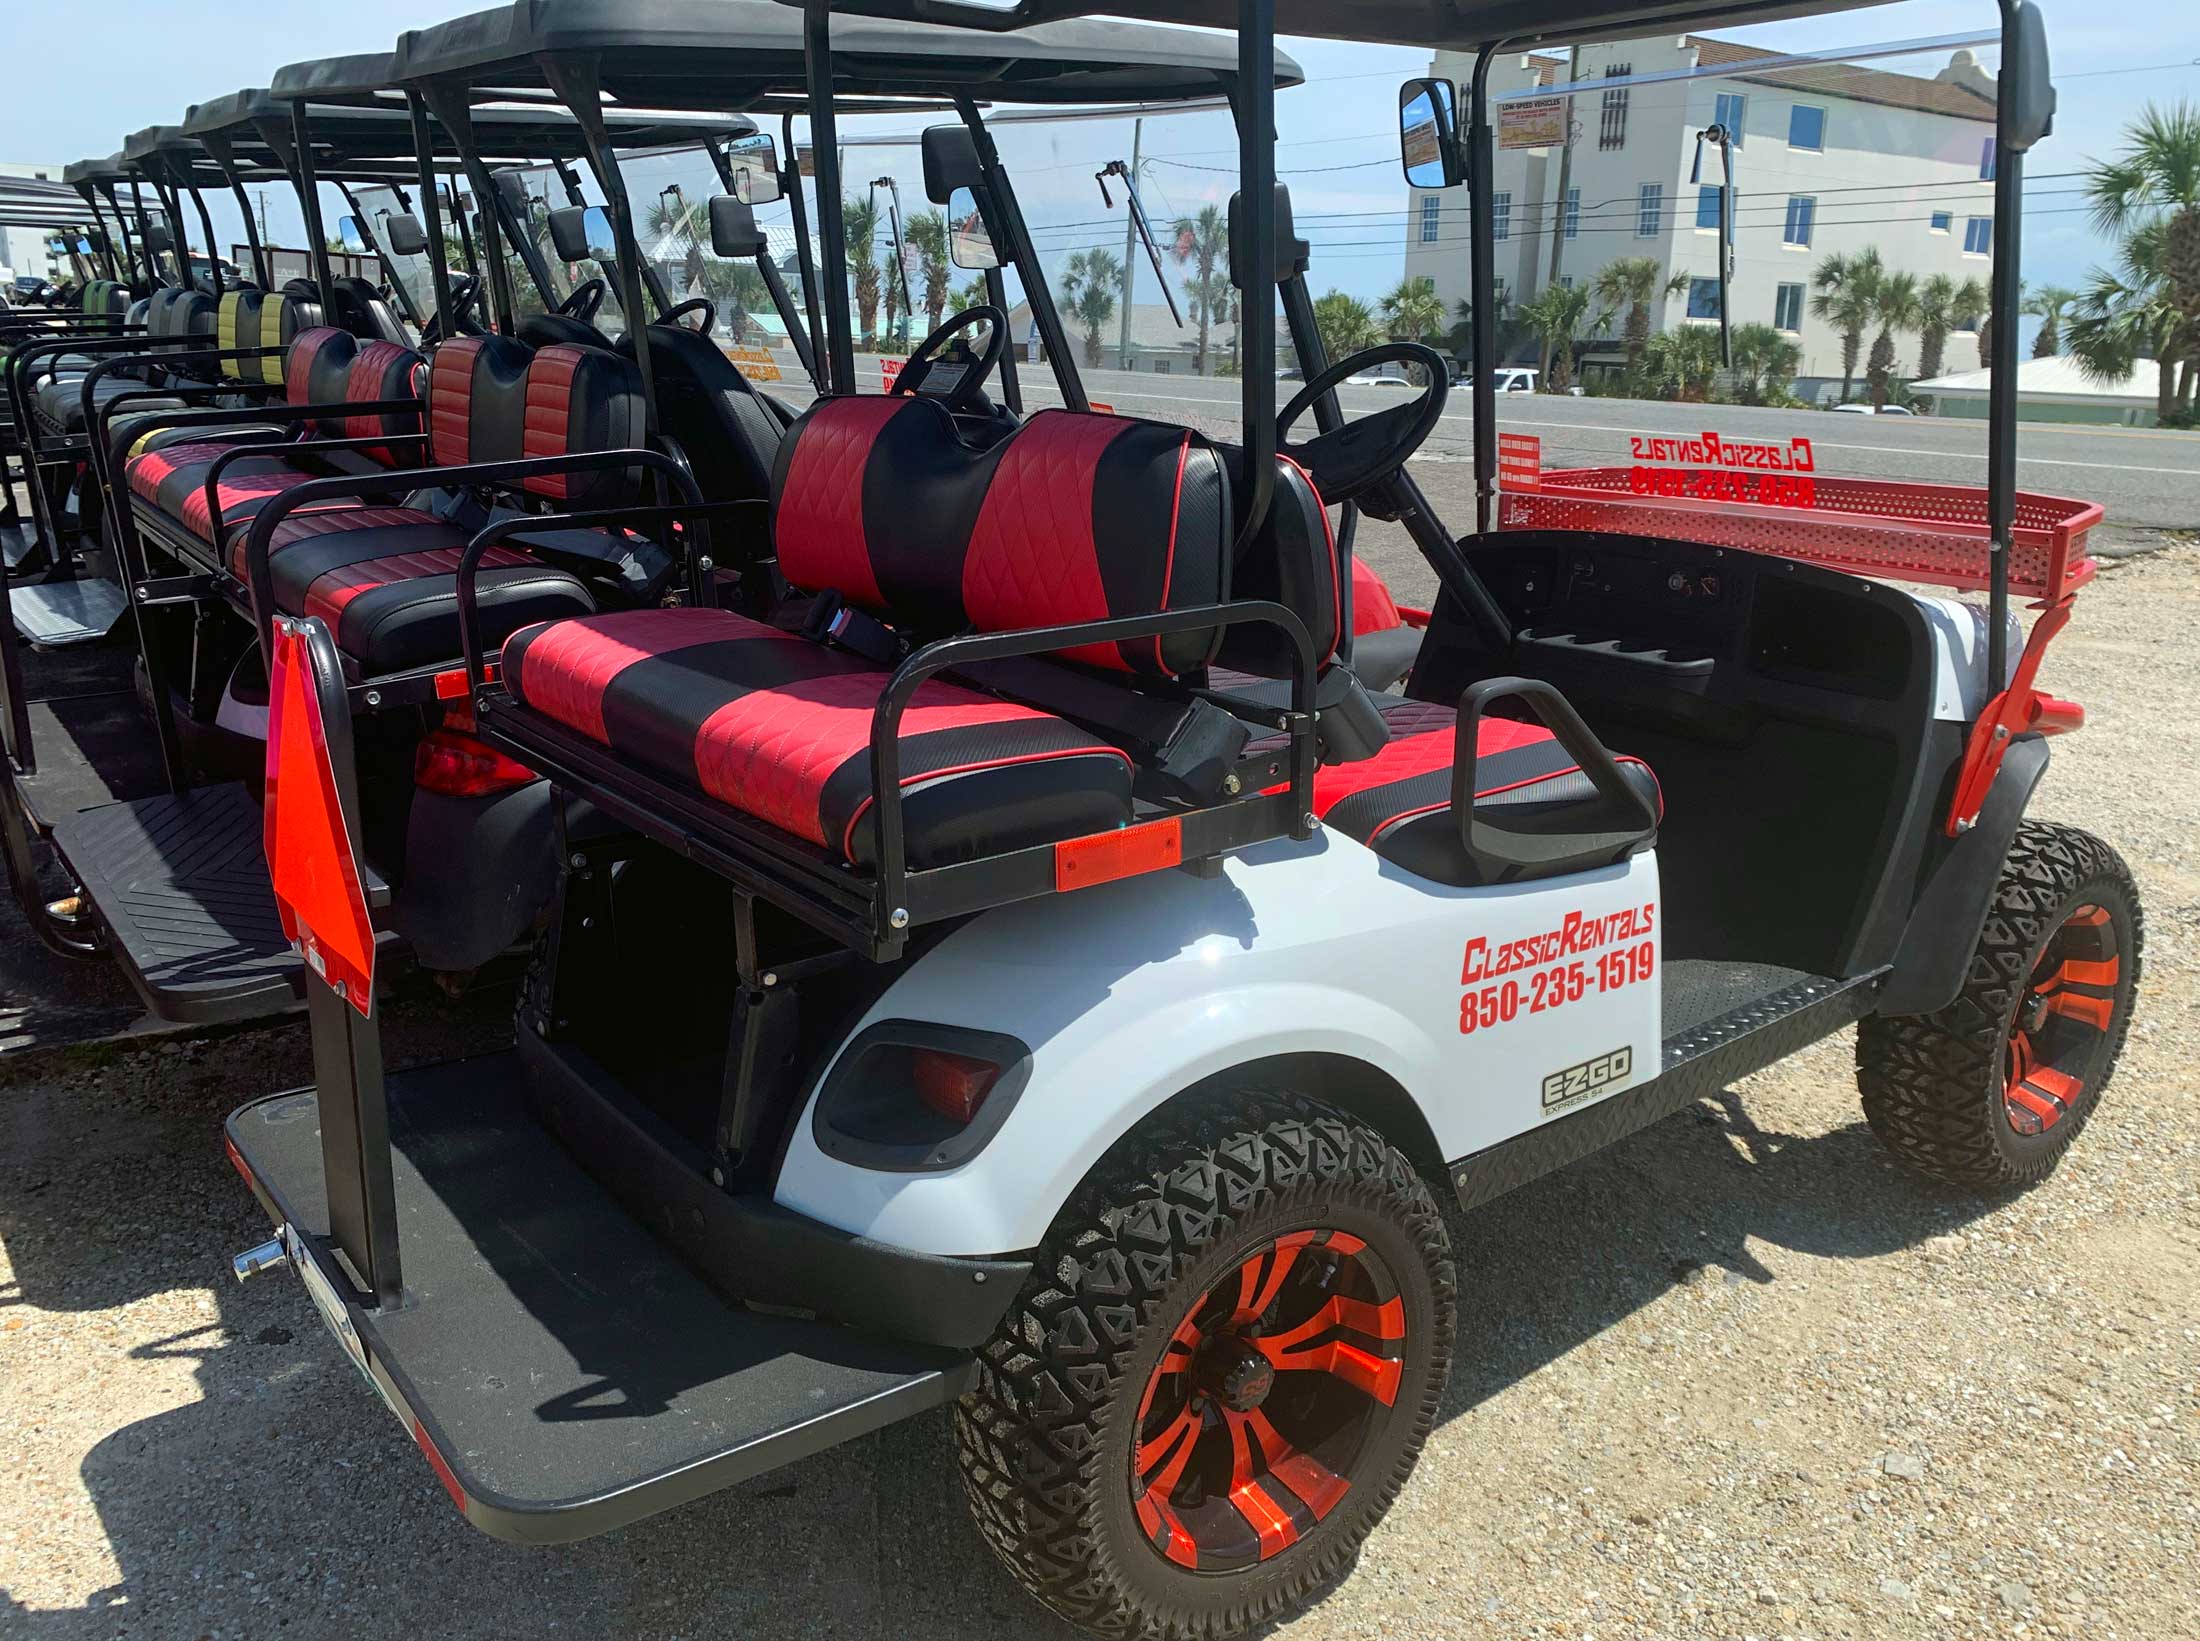 Golf cart panama motorsports rentals carts beach beachside book now